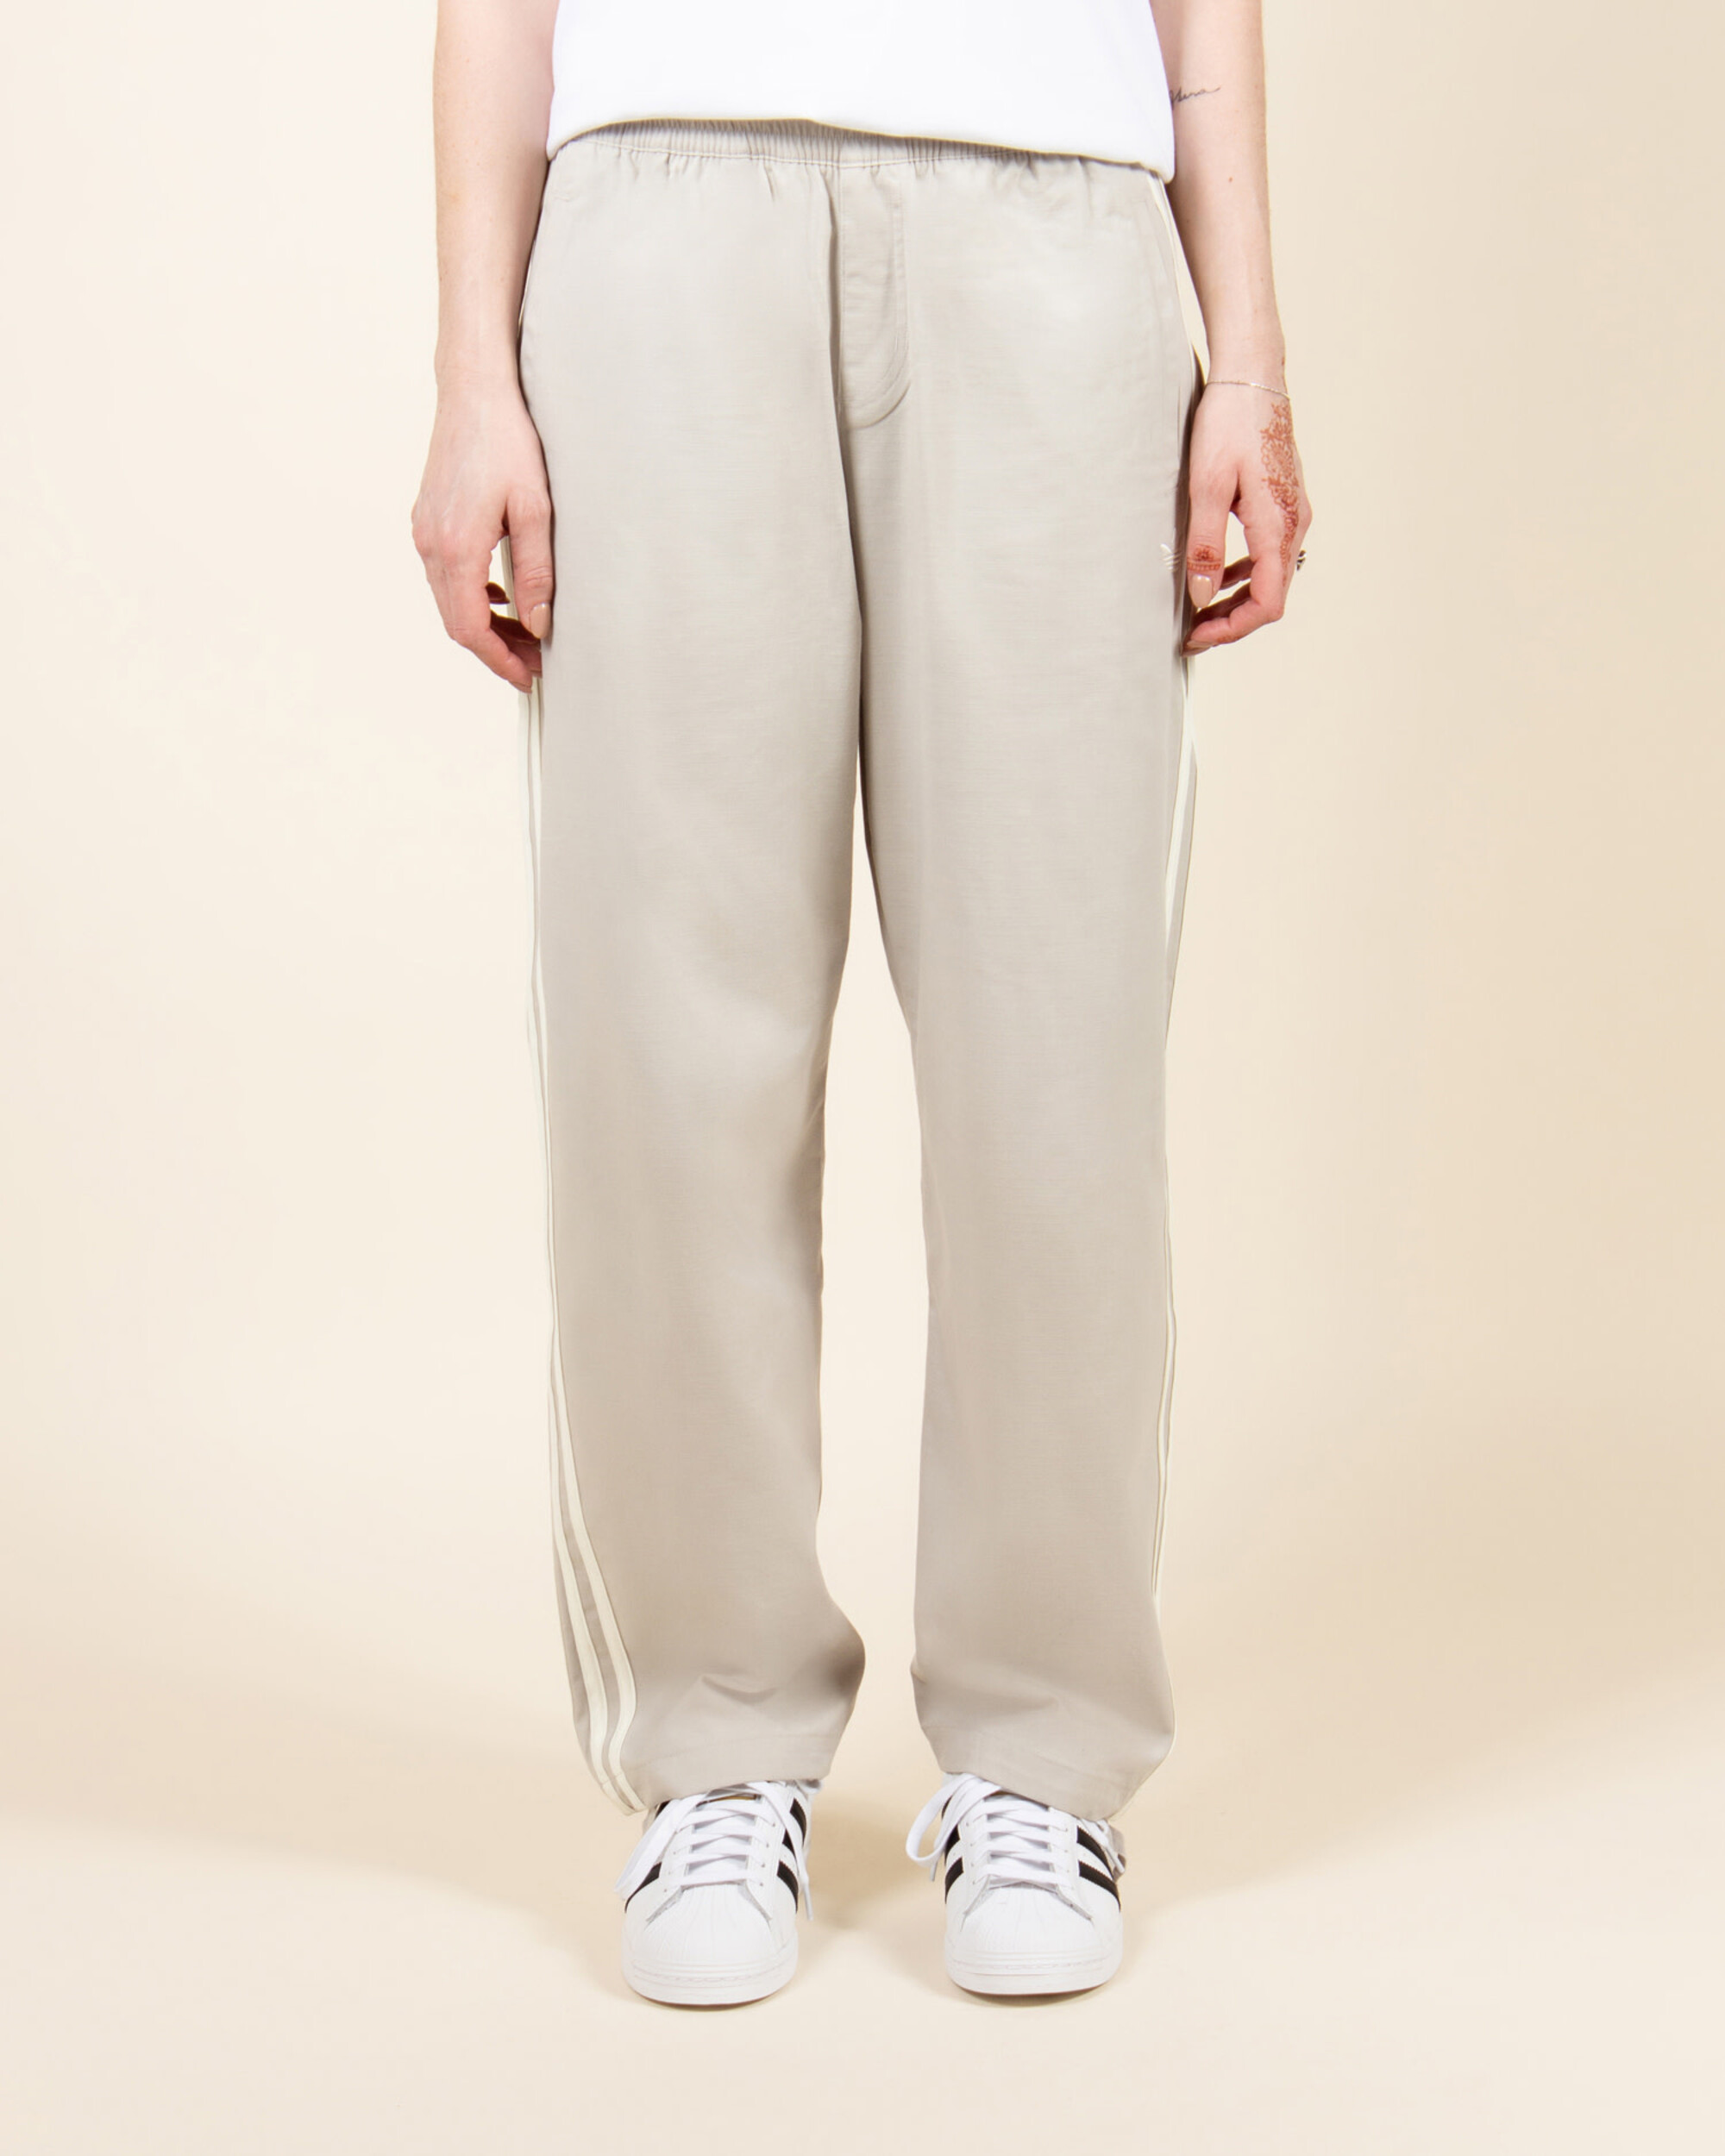 Adidas Superfire Track Pants - Putty Grey/Ivory